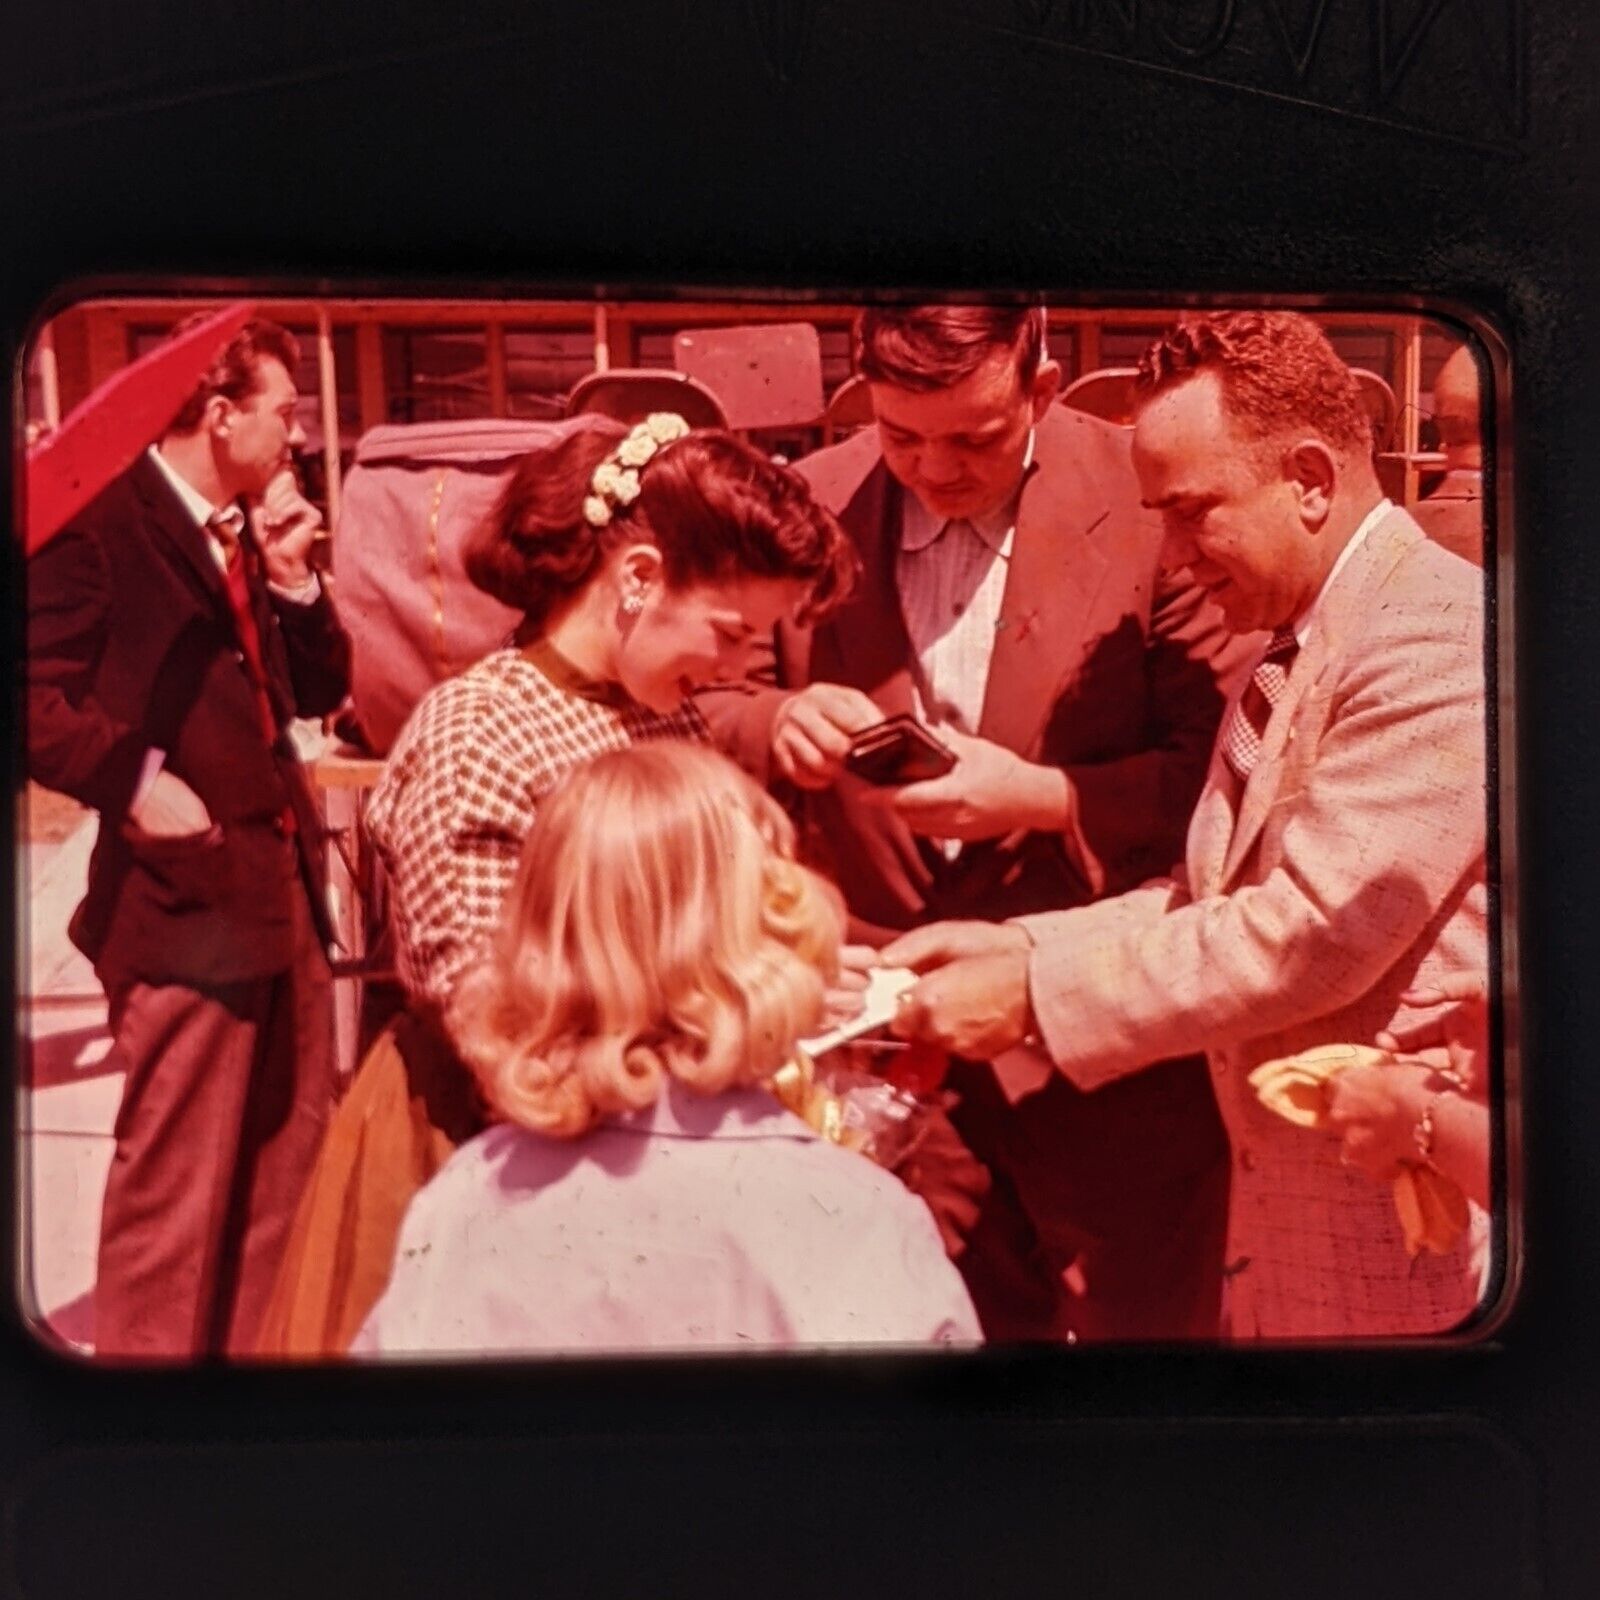 1956 Cedar Rapids, IA Lu Ann Simms Signing Autographs 35mm Film Photo Slide D3